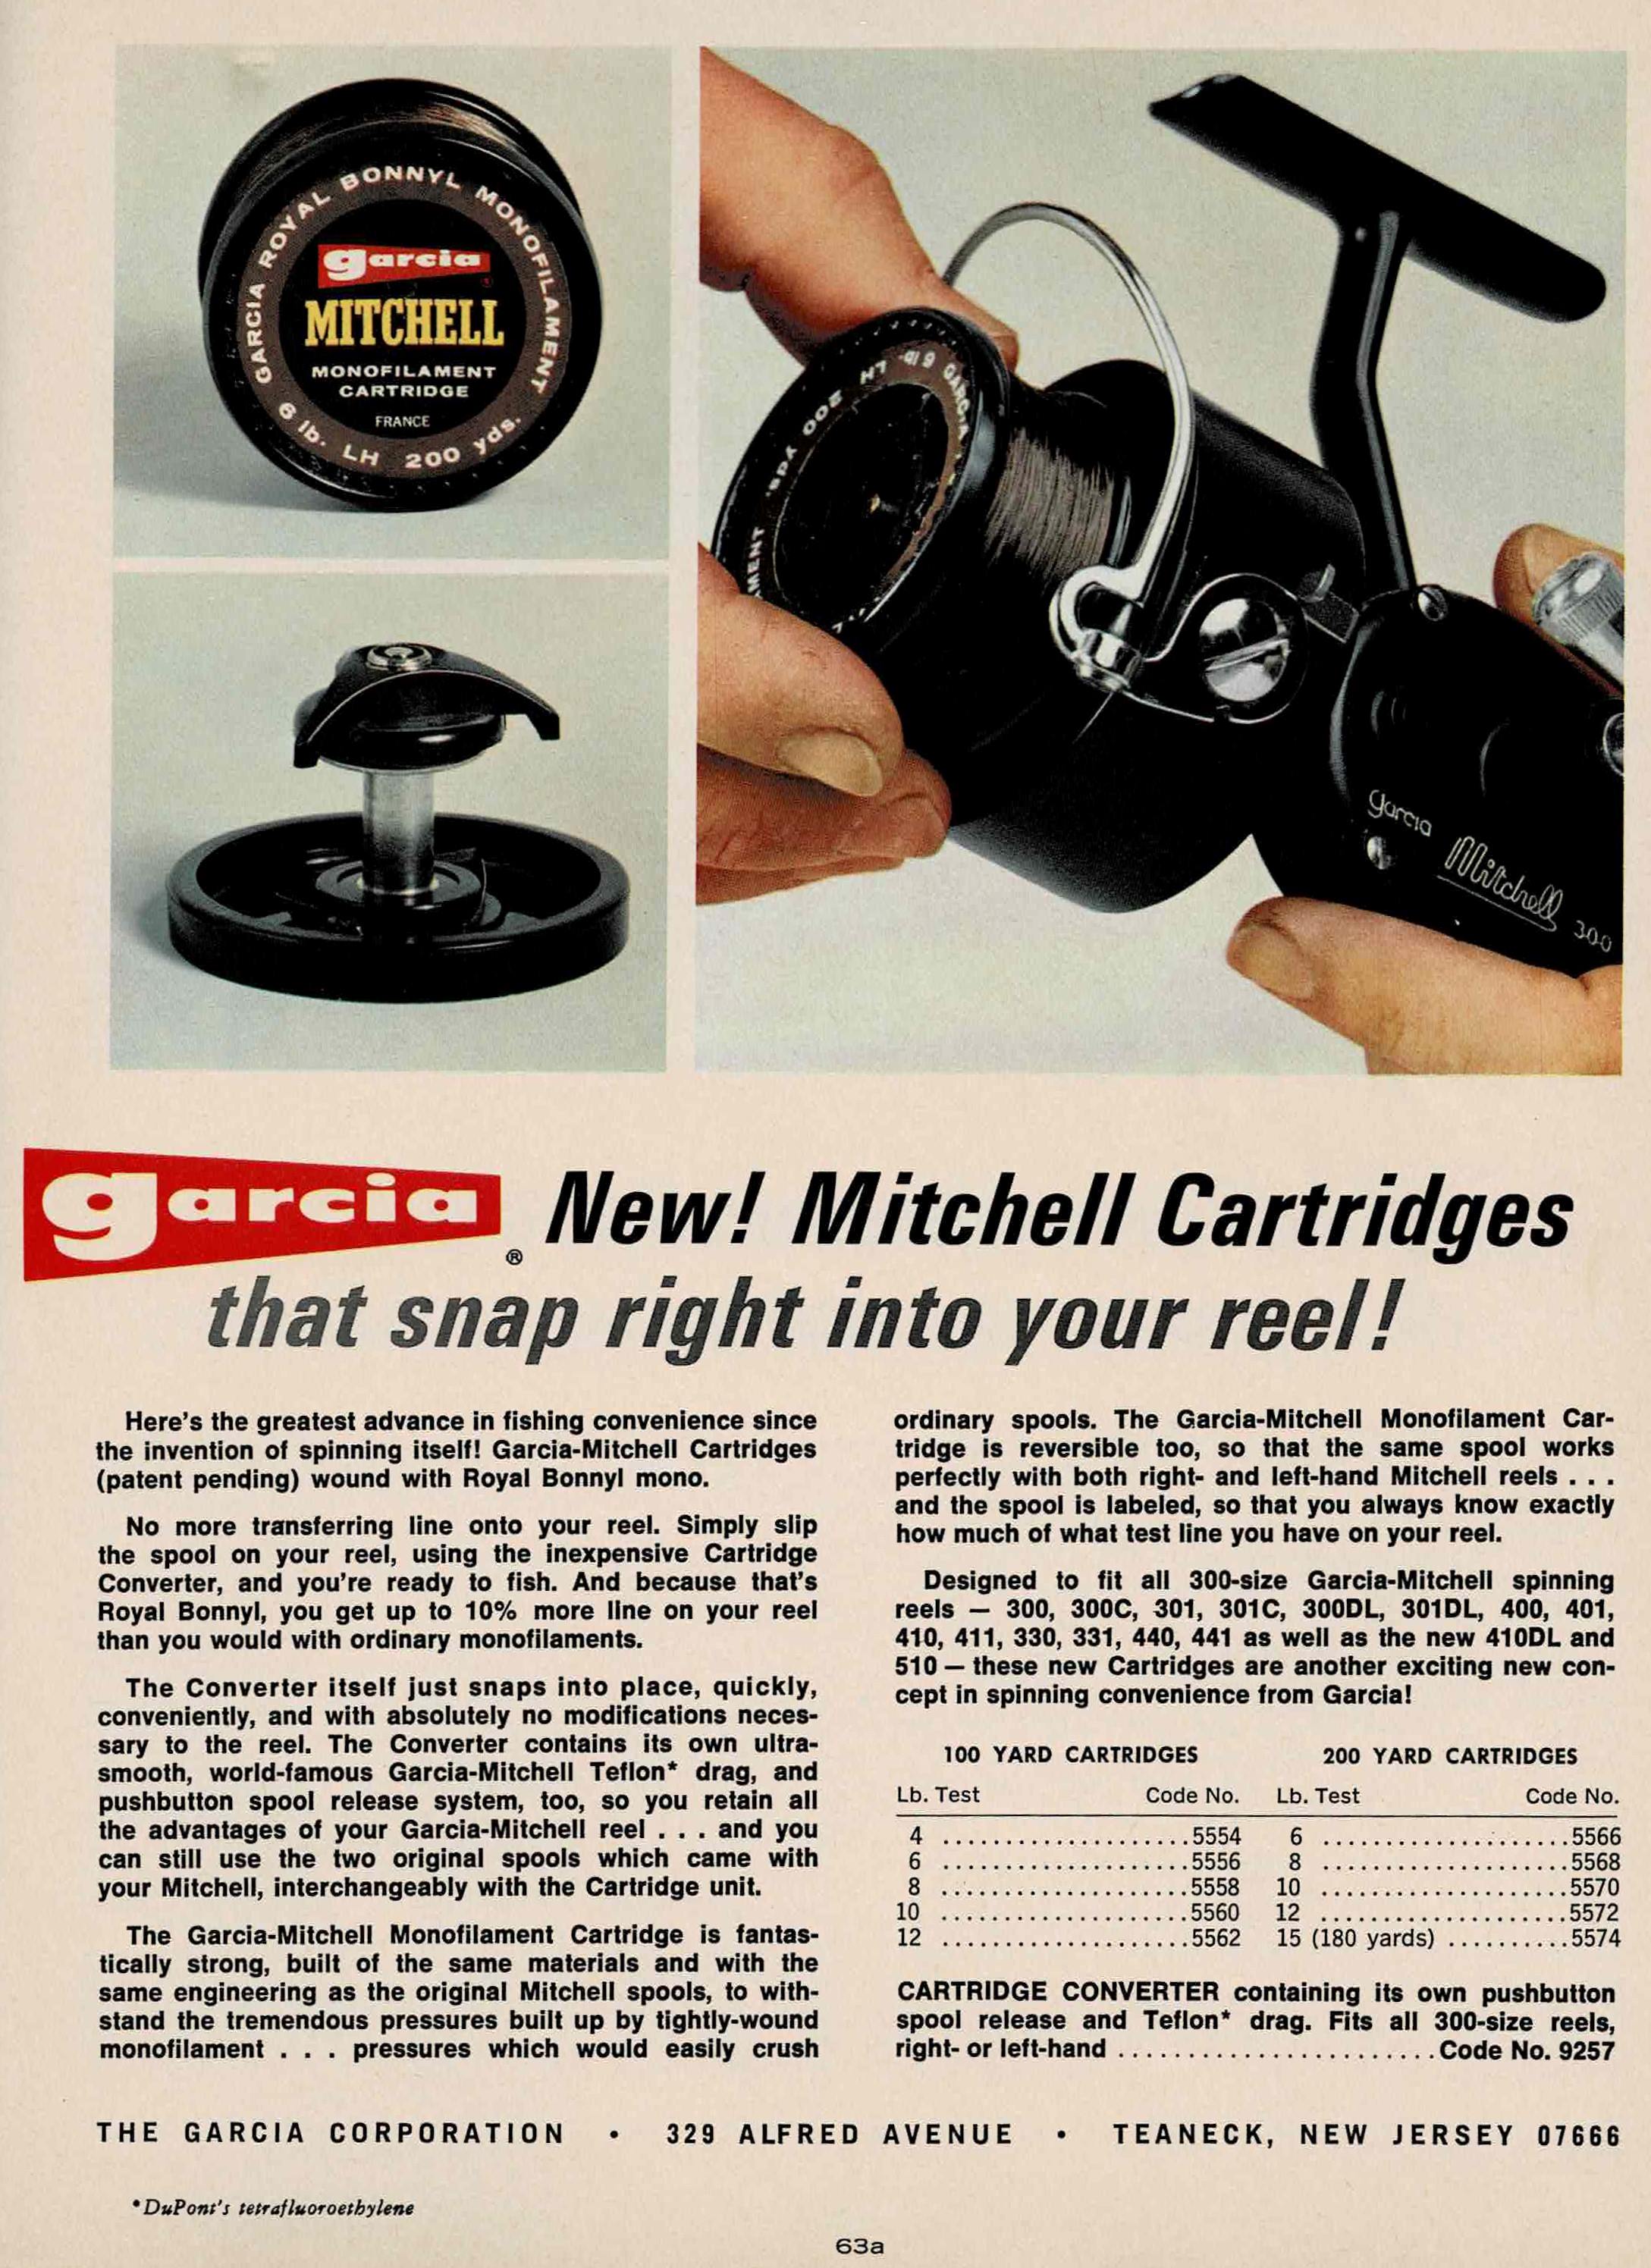 GarciaMitchell Cartridge ad-1971-72-edited.jpg